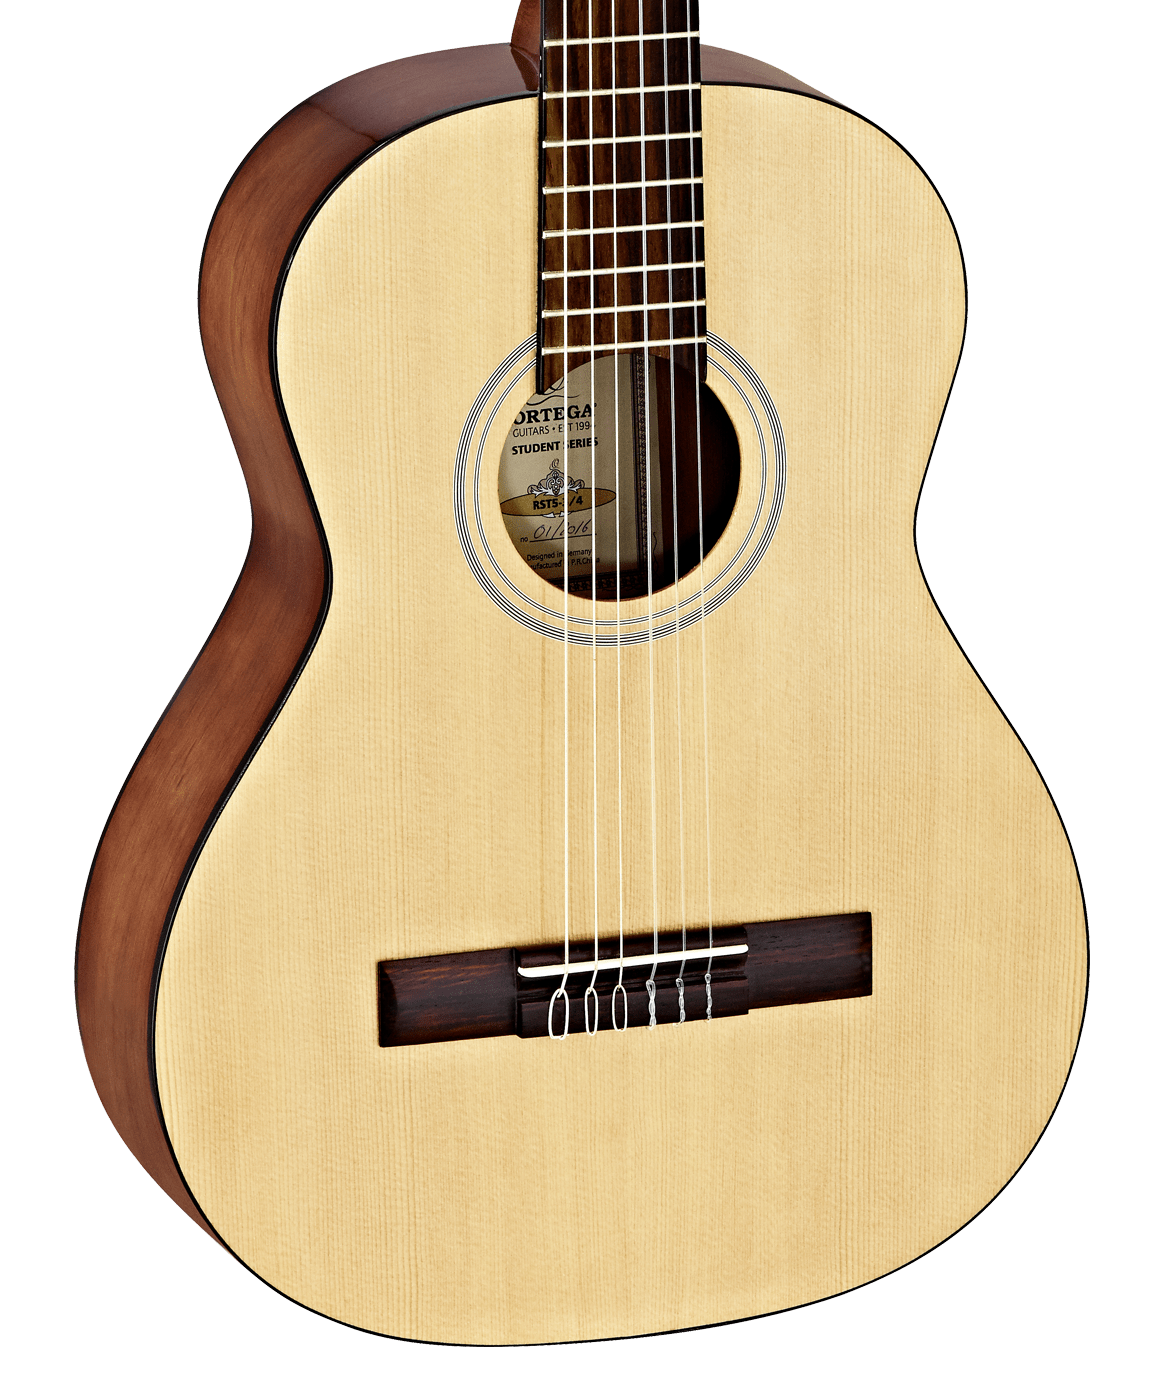 Ortega Student Series 3/4 Size Acoustic Guitar Guitars on...